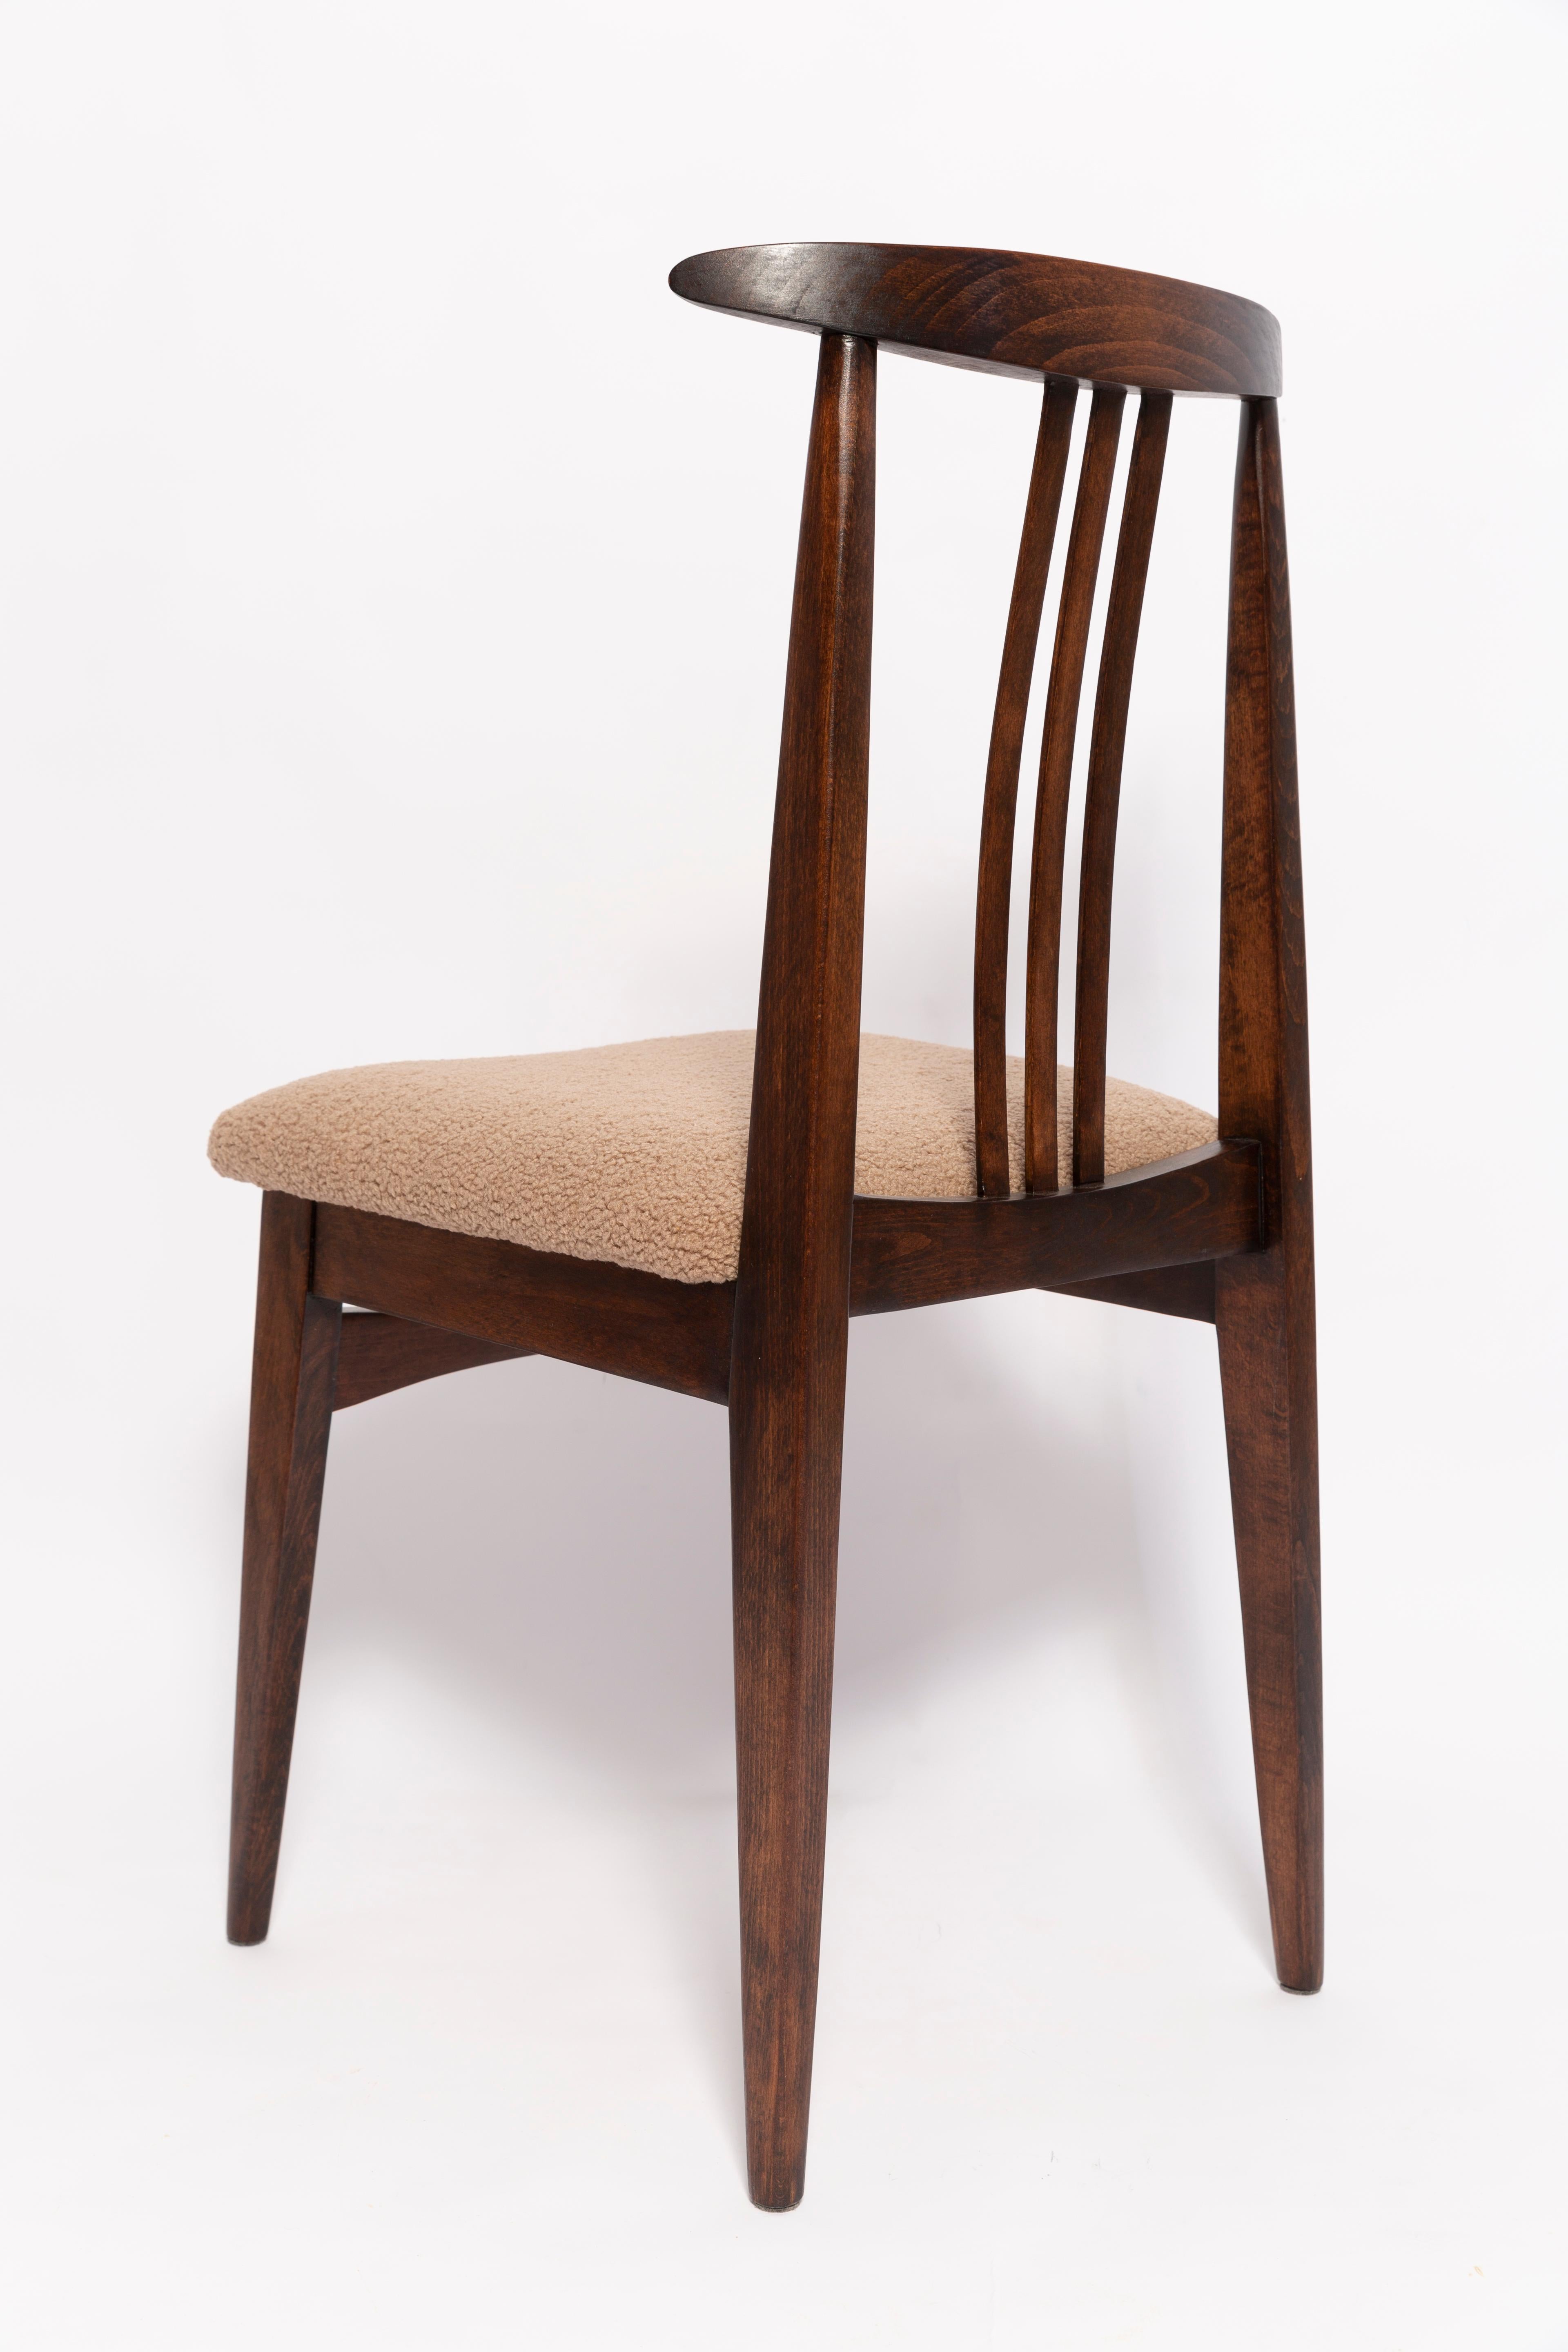 20th Century Mid Century Latte Boucle Chair, Walnut Wood, M. Zielinski, Europe, 1960s For Sale